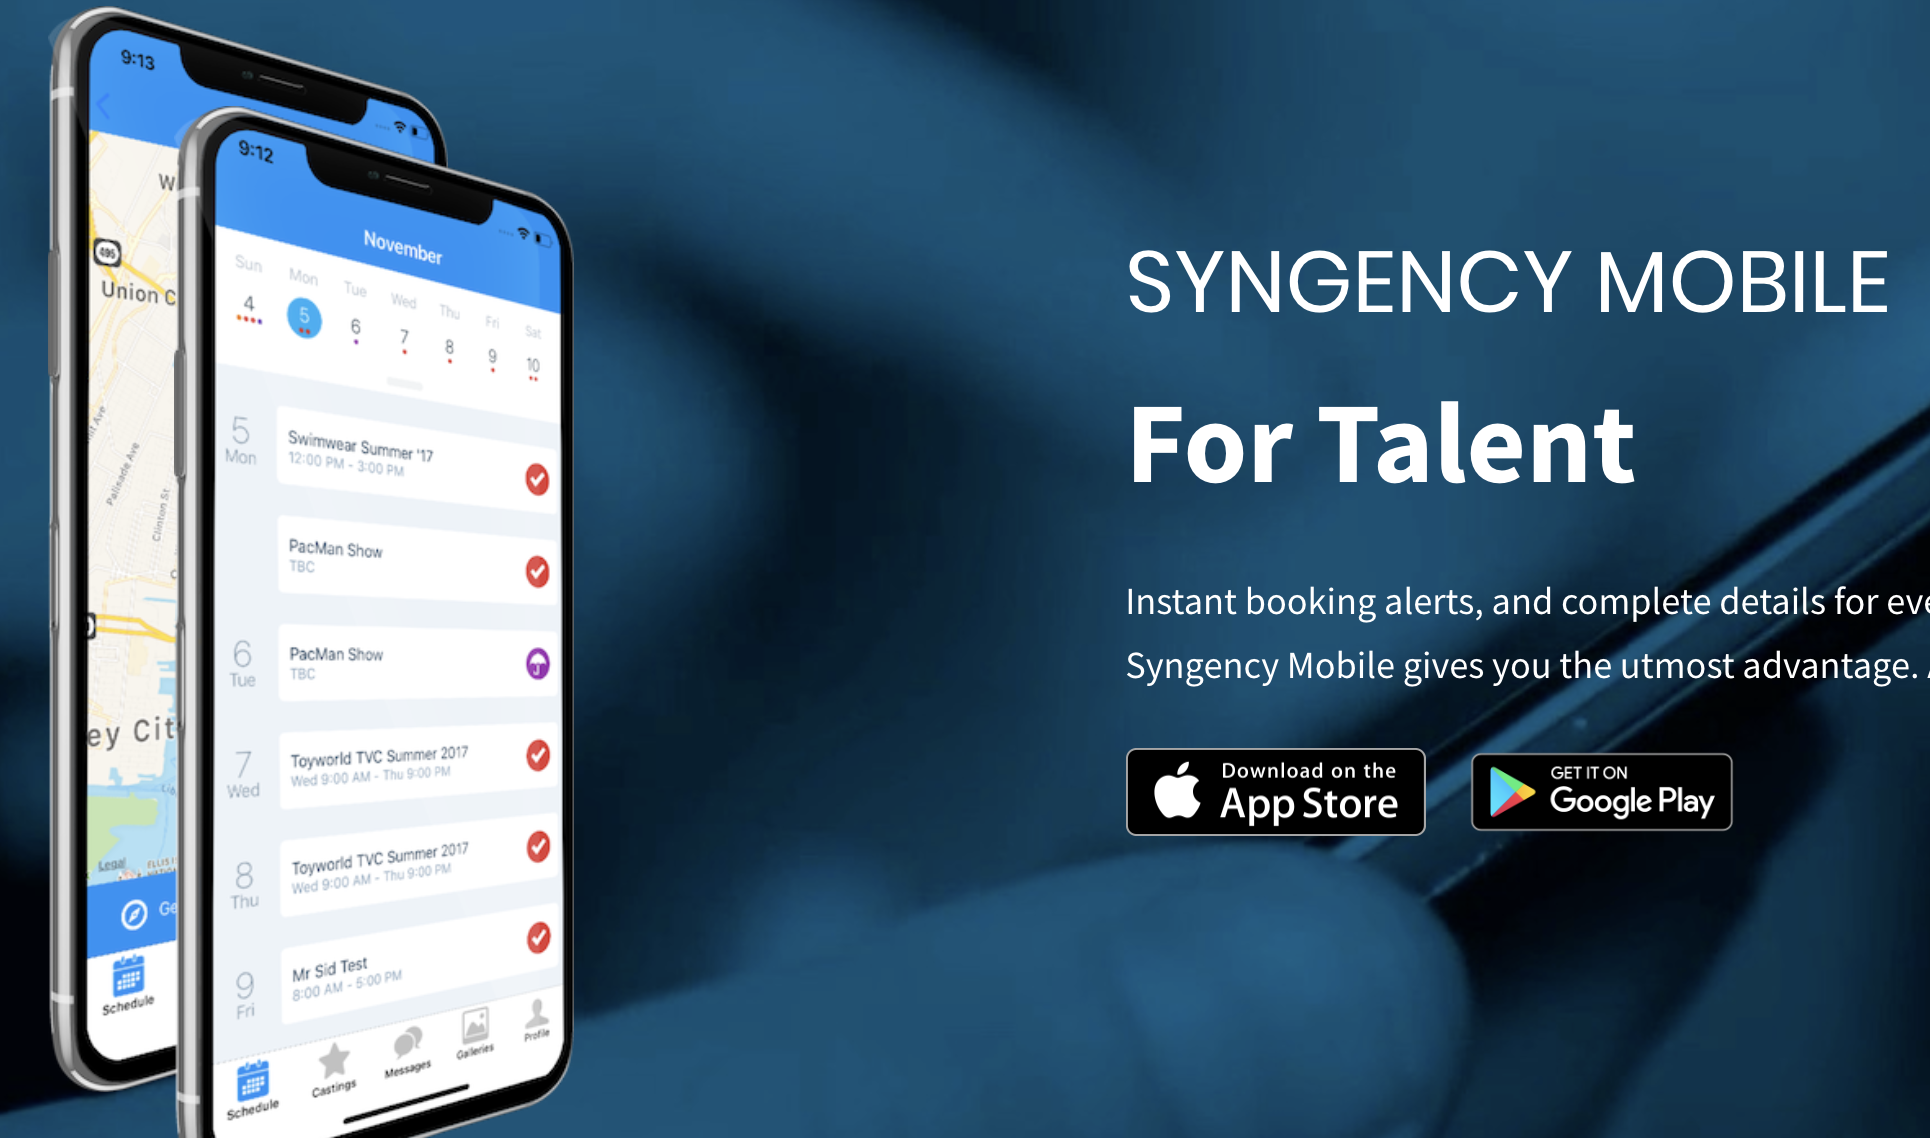 Syngency Mobile for Talent